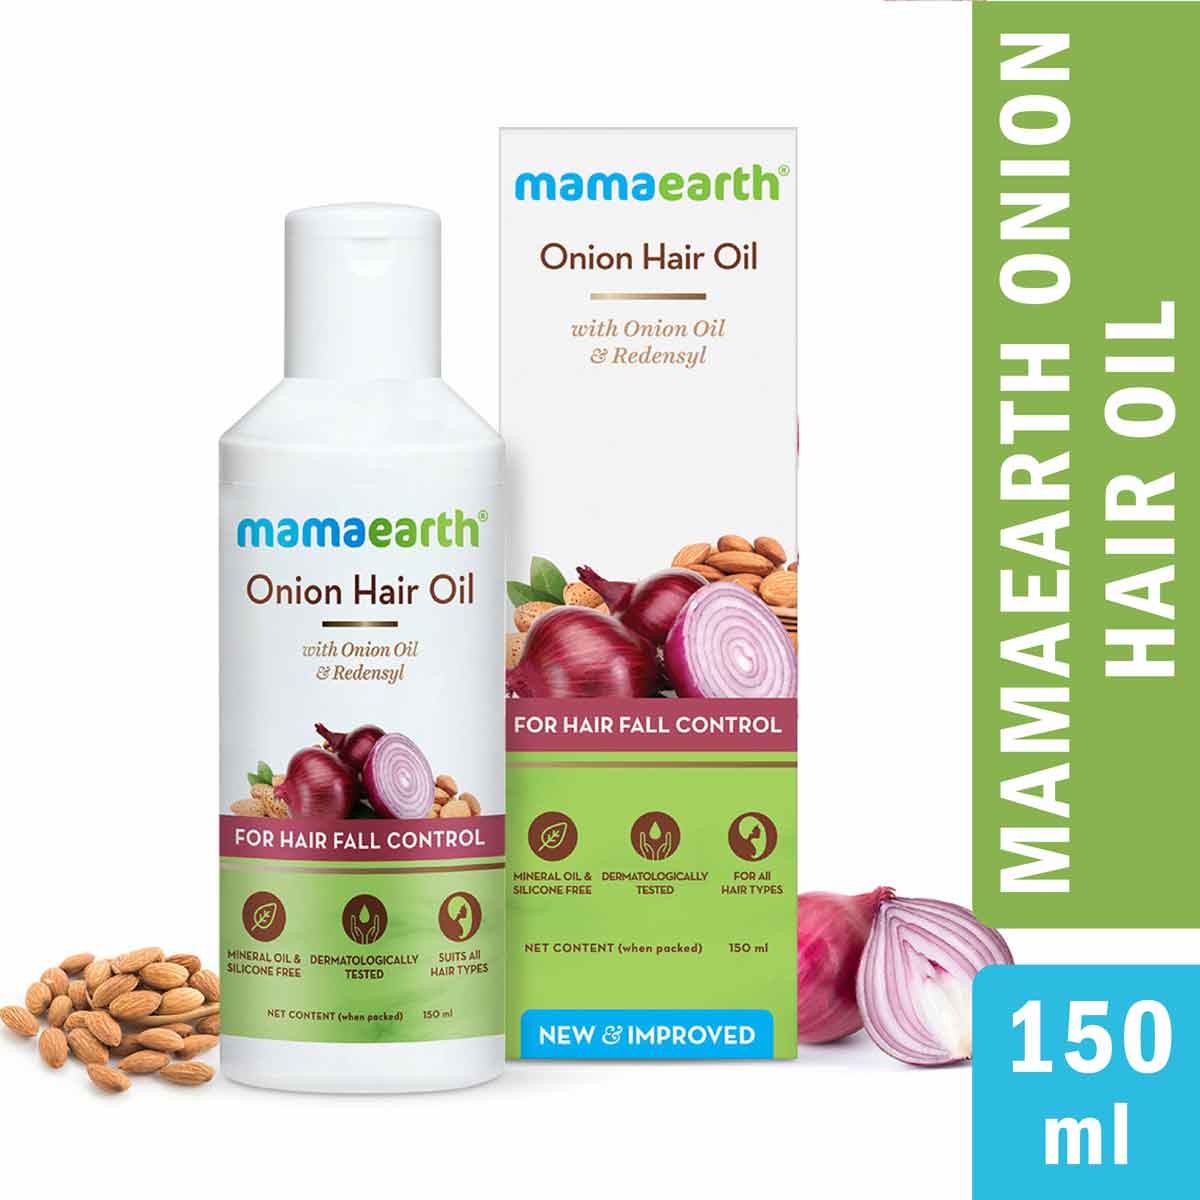 Mamaearth Onion Hair Fall Shampoo Review | Reduces Hairfall